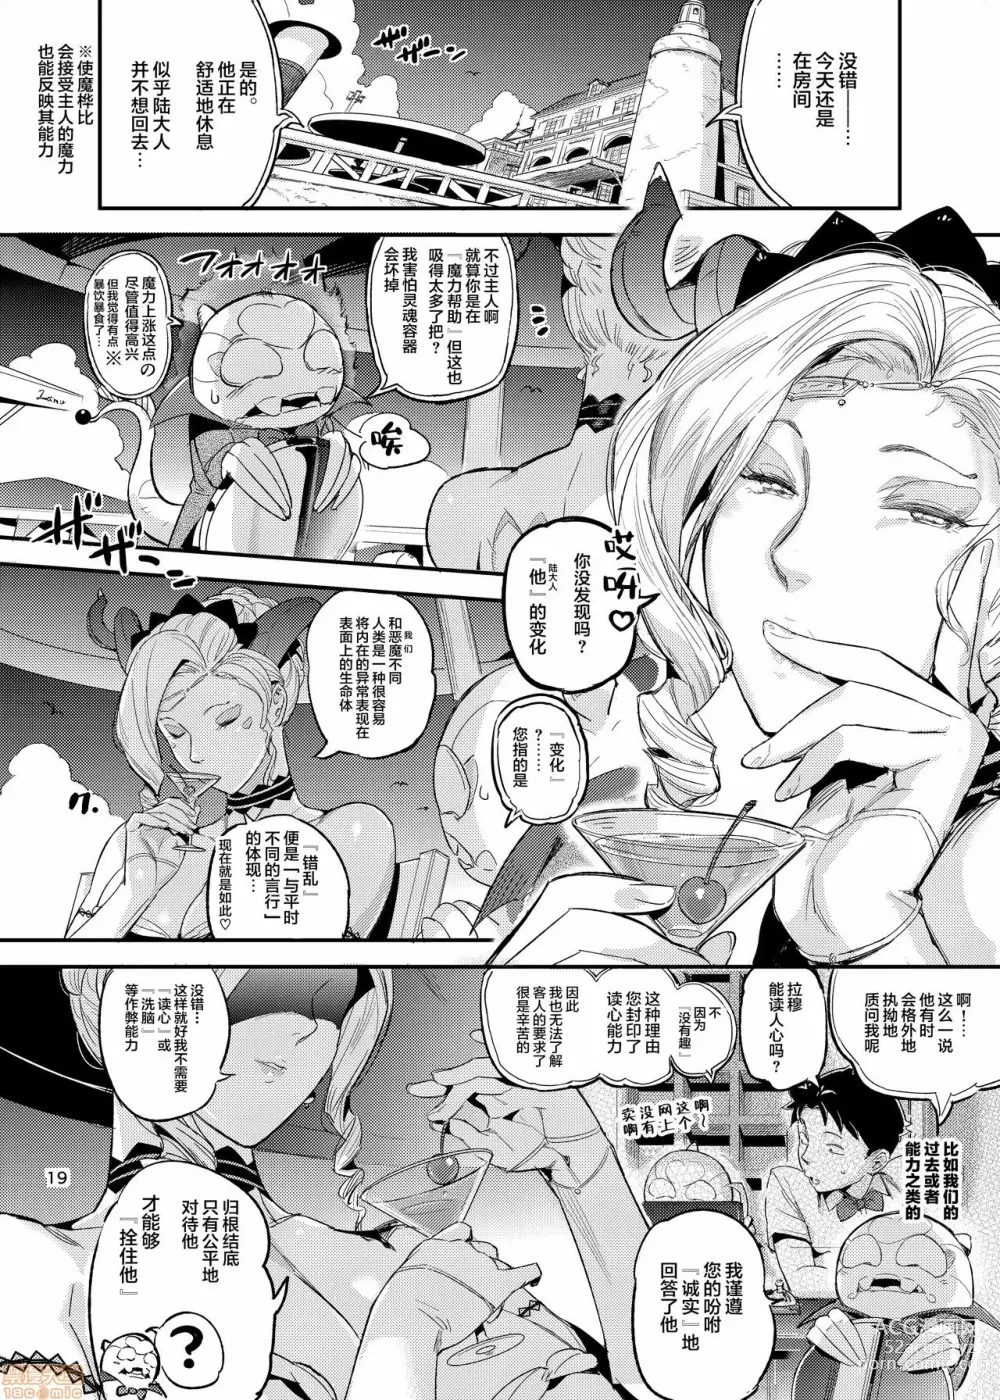 Page 20 of doujinshi 2